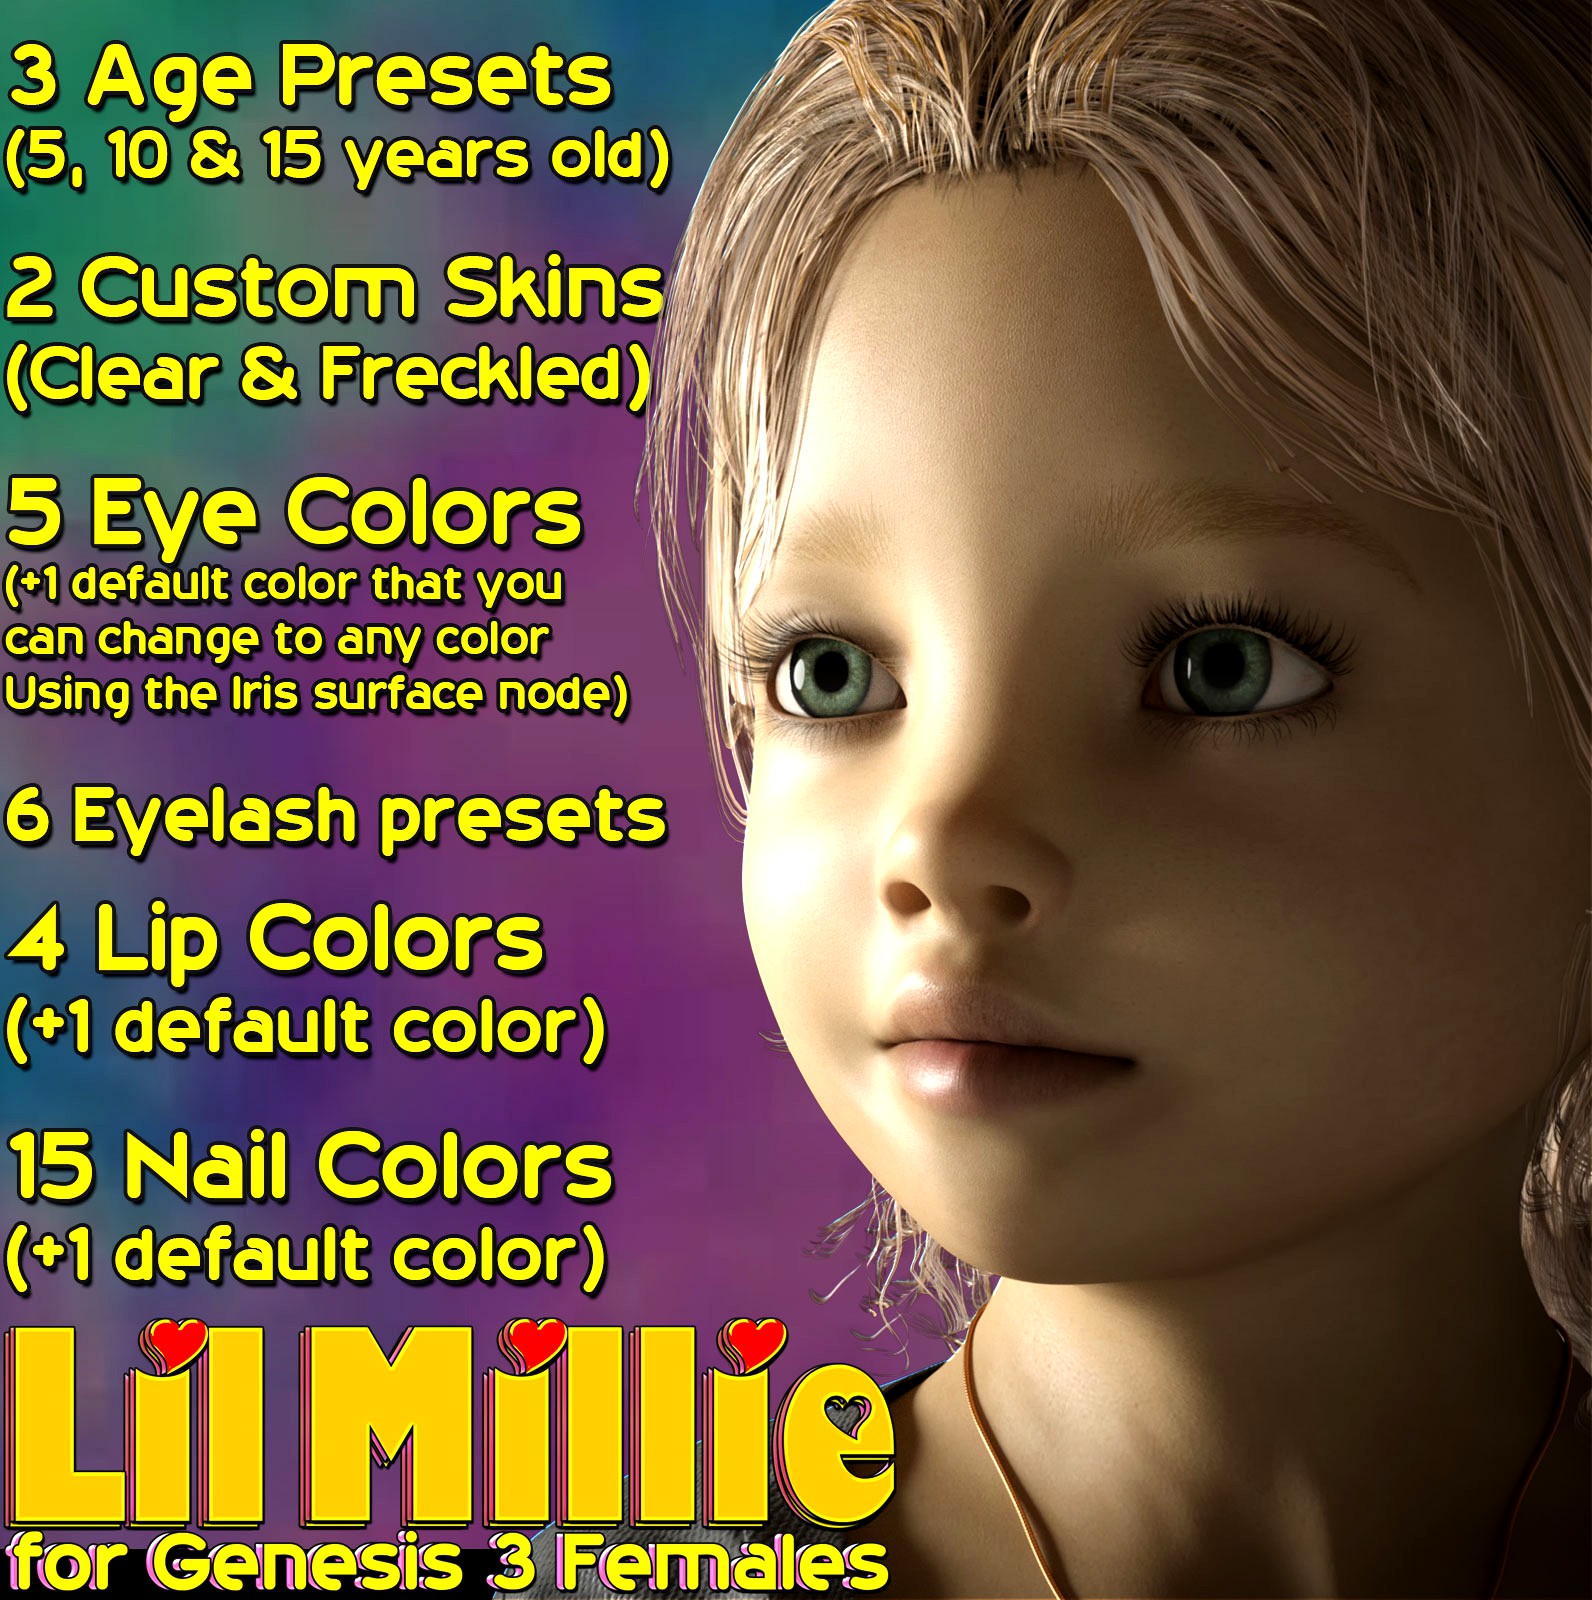 Lil Millie for G3F